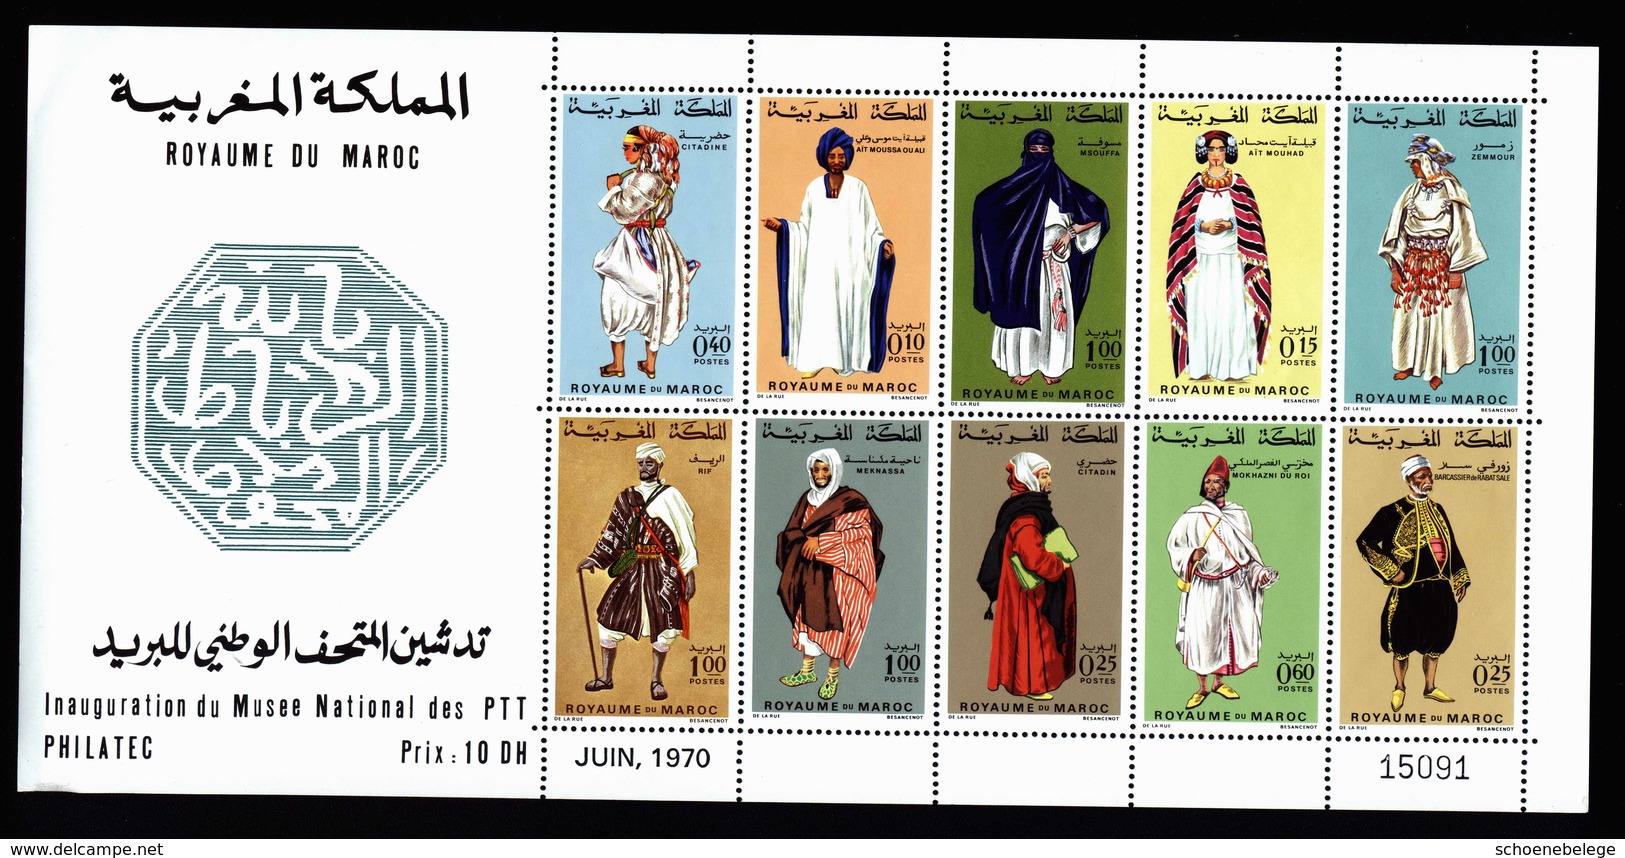 A5968) Marokko Maroc Souvenir Sheet With Enveloppe PHILATEC 1970 - Maroc (1956-...)